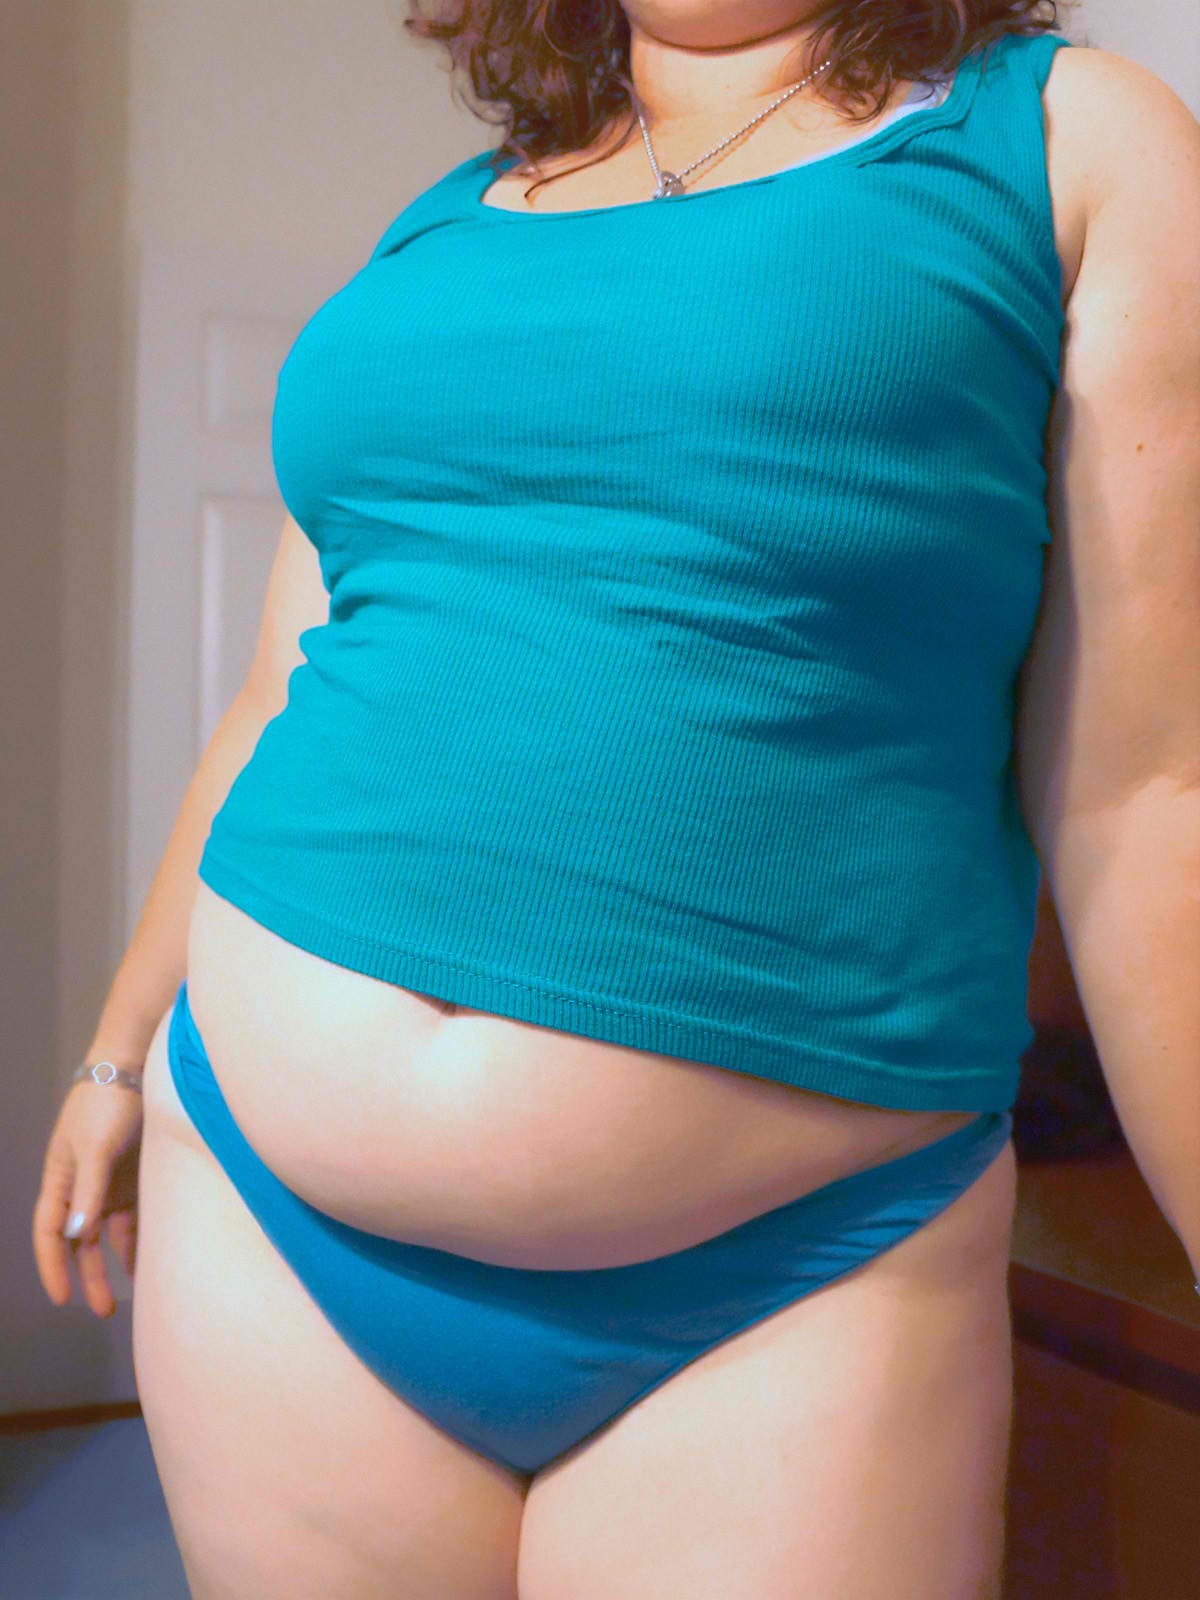 Plump Mature Tight Underwear - Sex of Fat Women in Tight Knickers (45 photos) - motherless porn pics